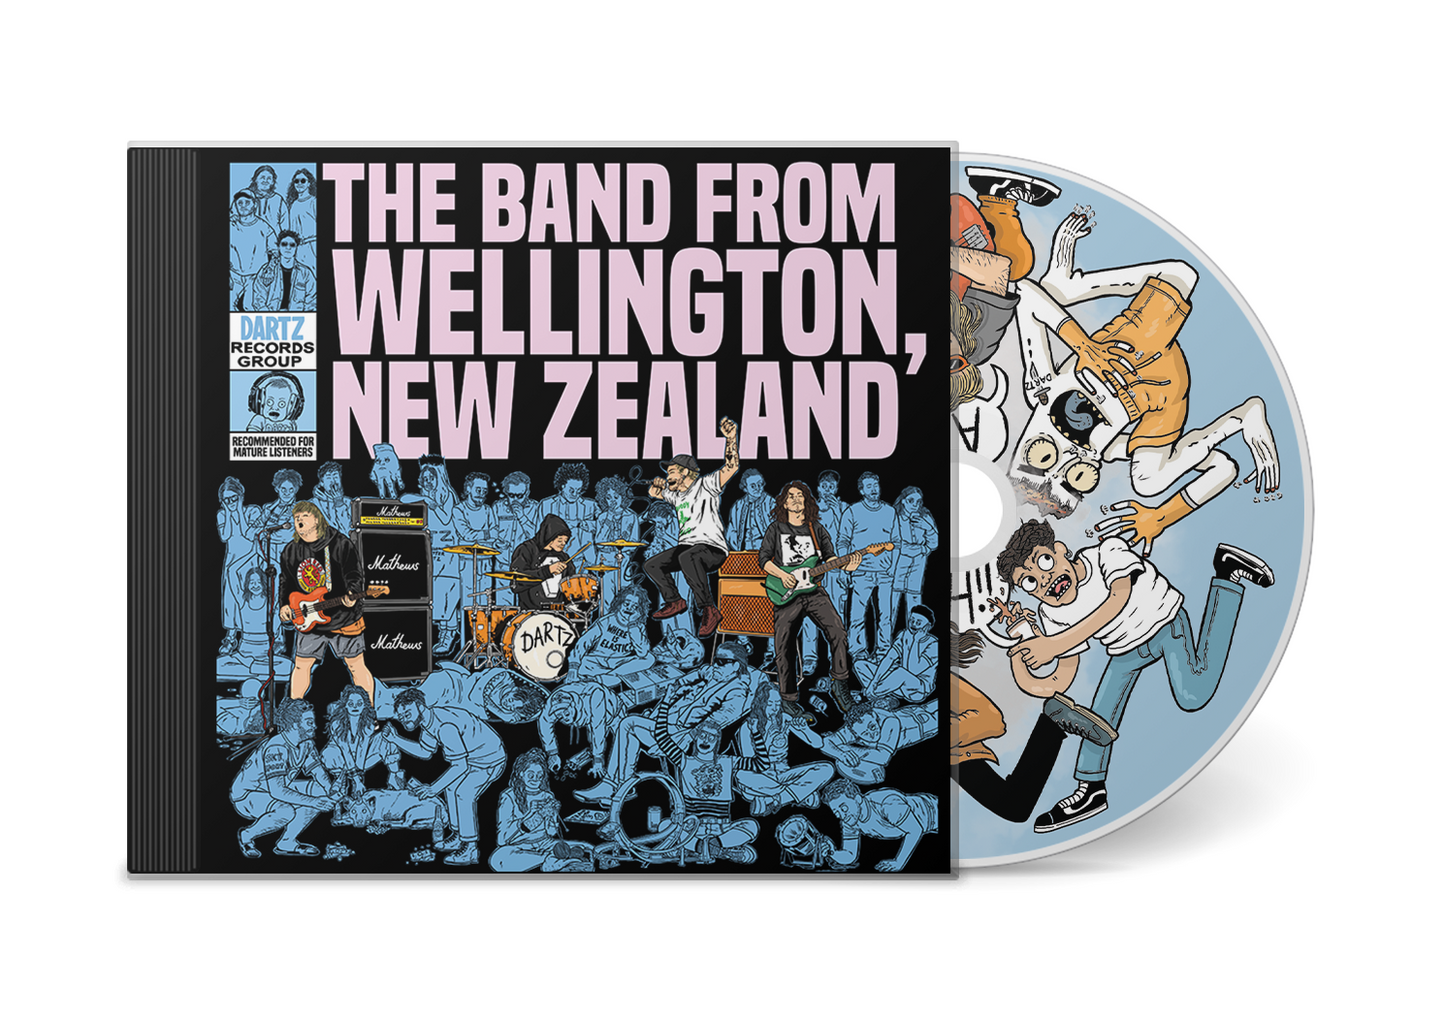 DARTZ - The Band from Wellington, New Zealand